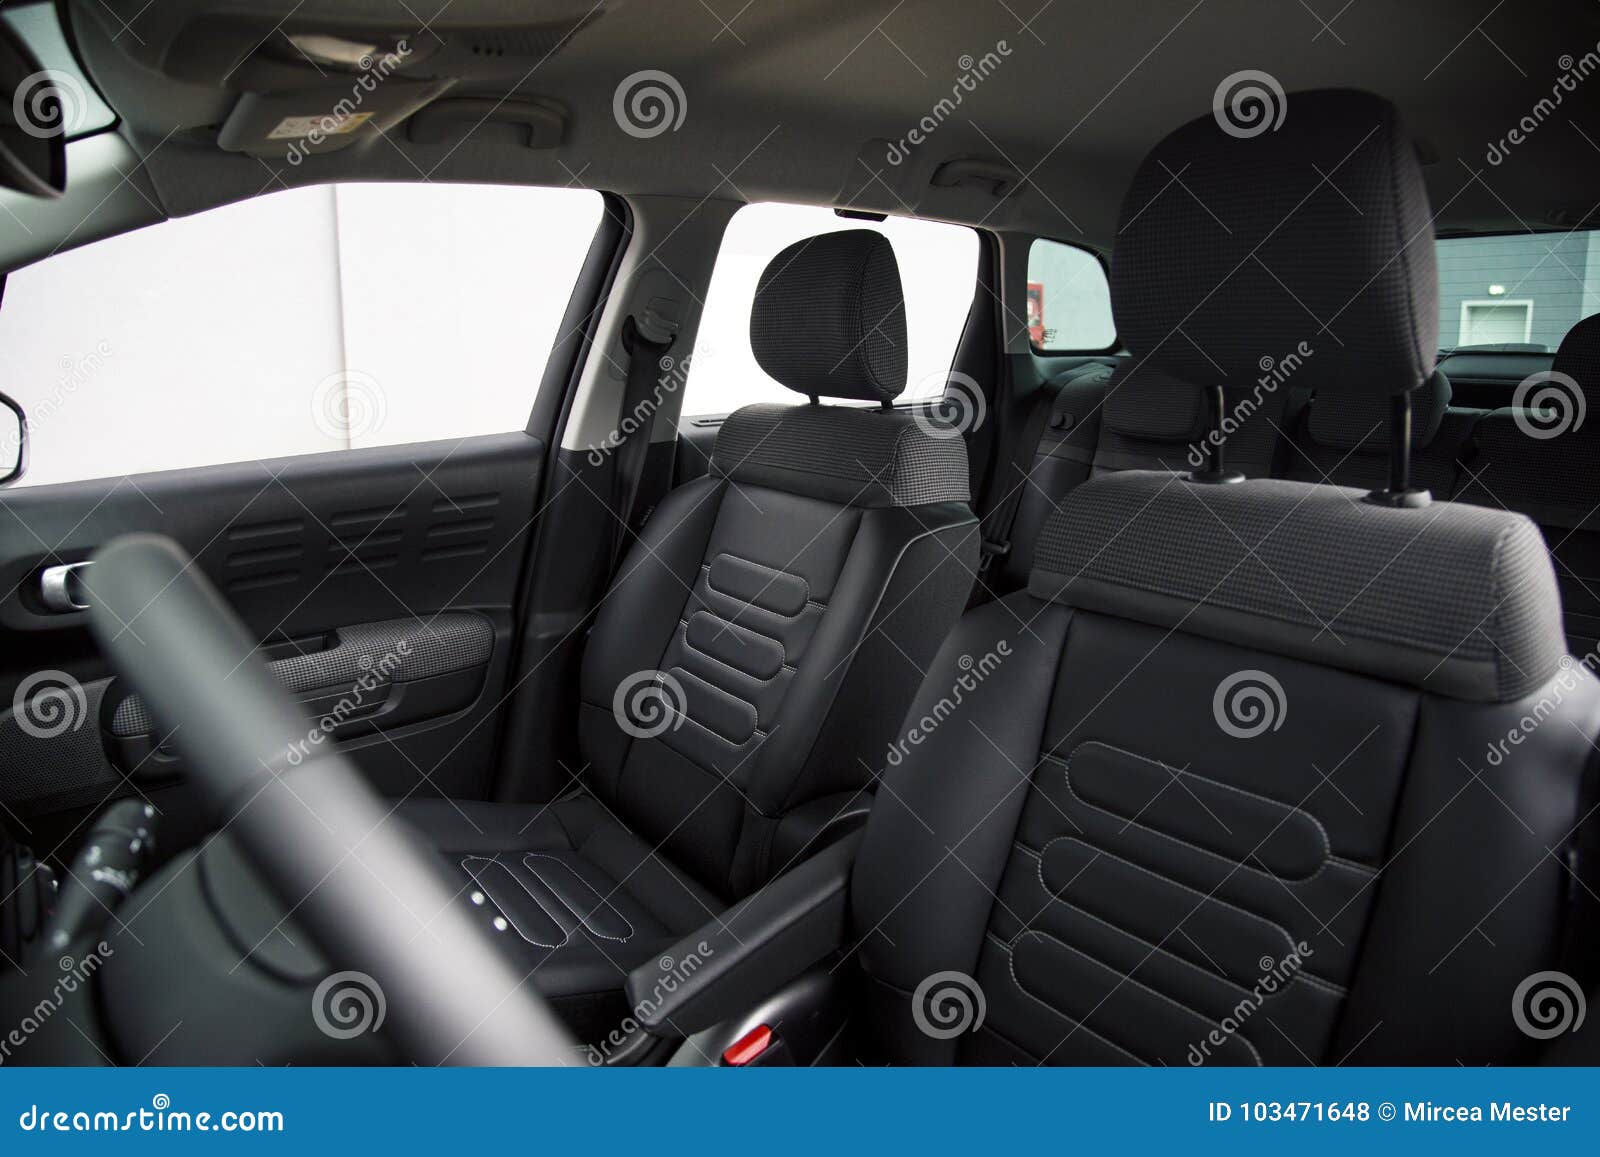 https://thumbs.dreamstime.com/z/auto-innenraum-front-car-seats-103471648.jpg